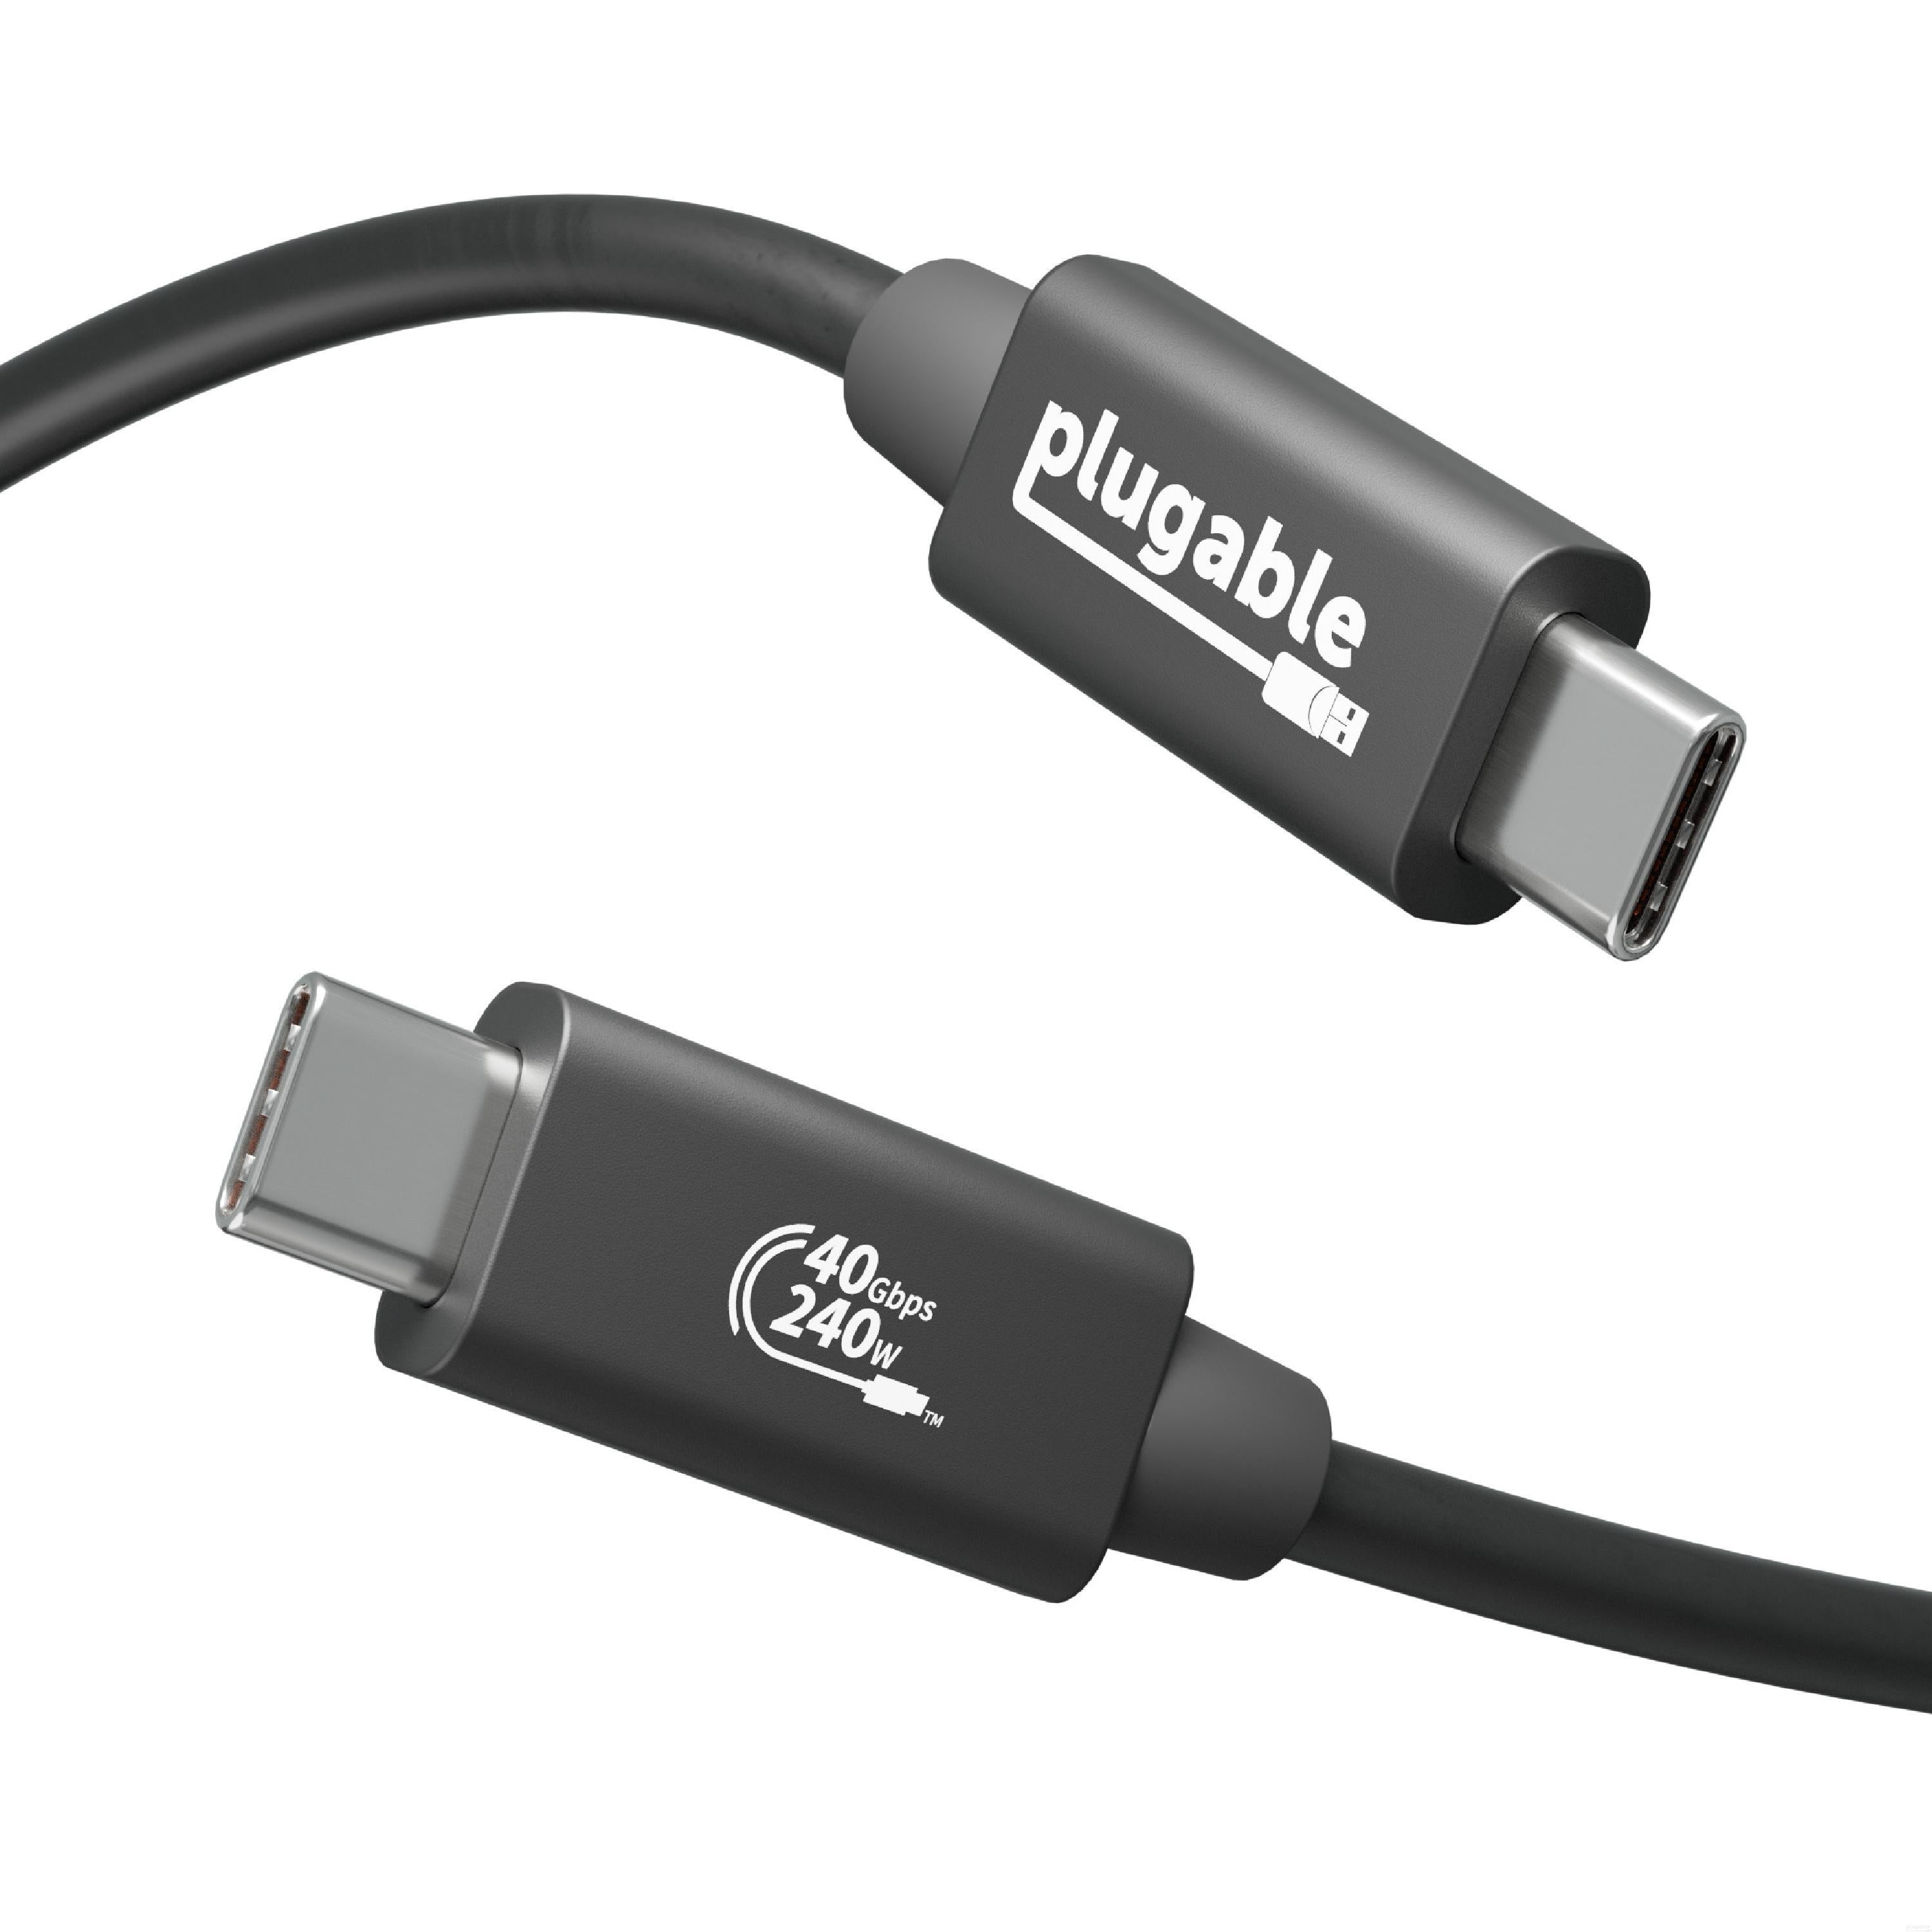 Plugable 240W Cable (3.3ft/1m) – Plugable Technologies